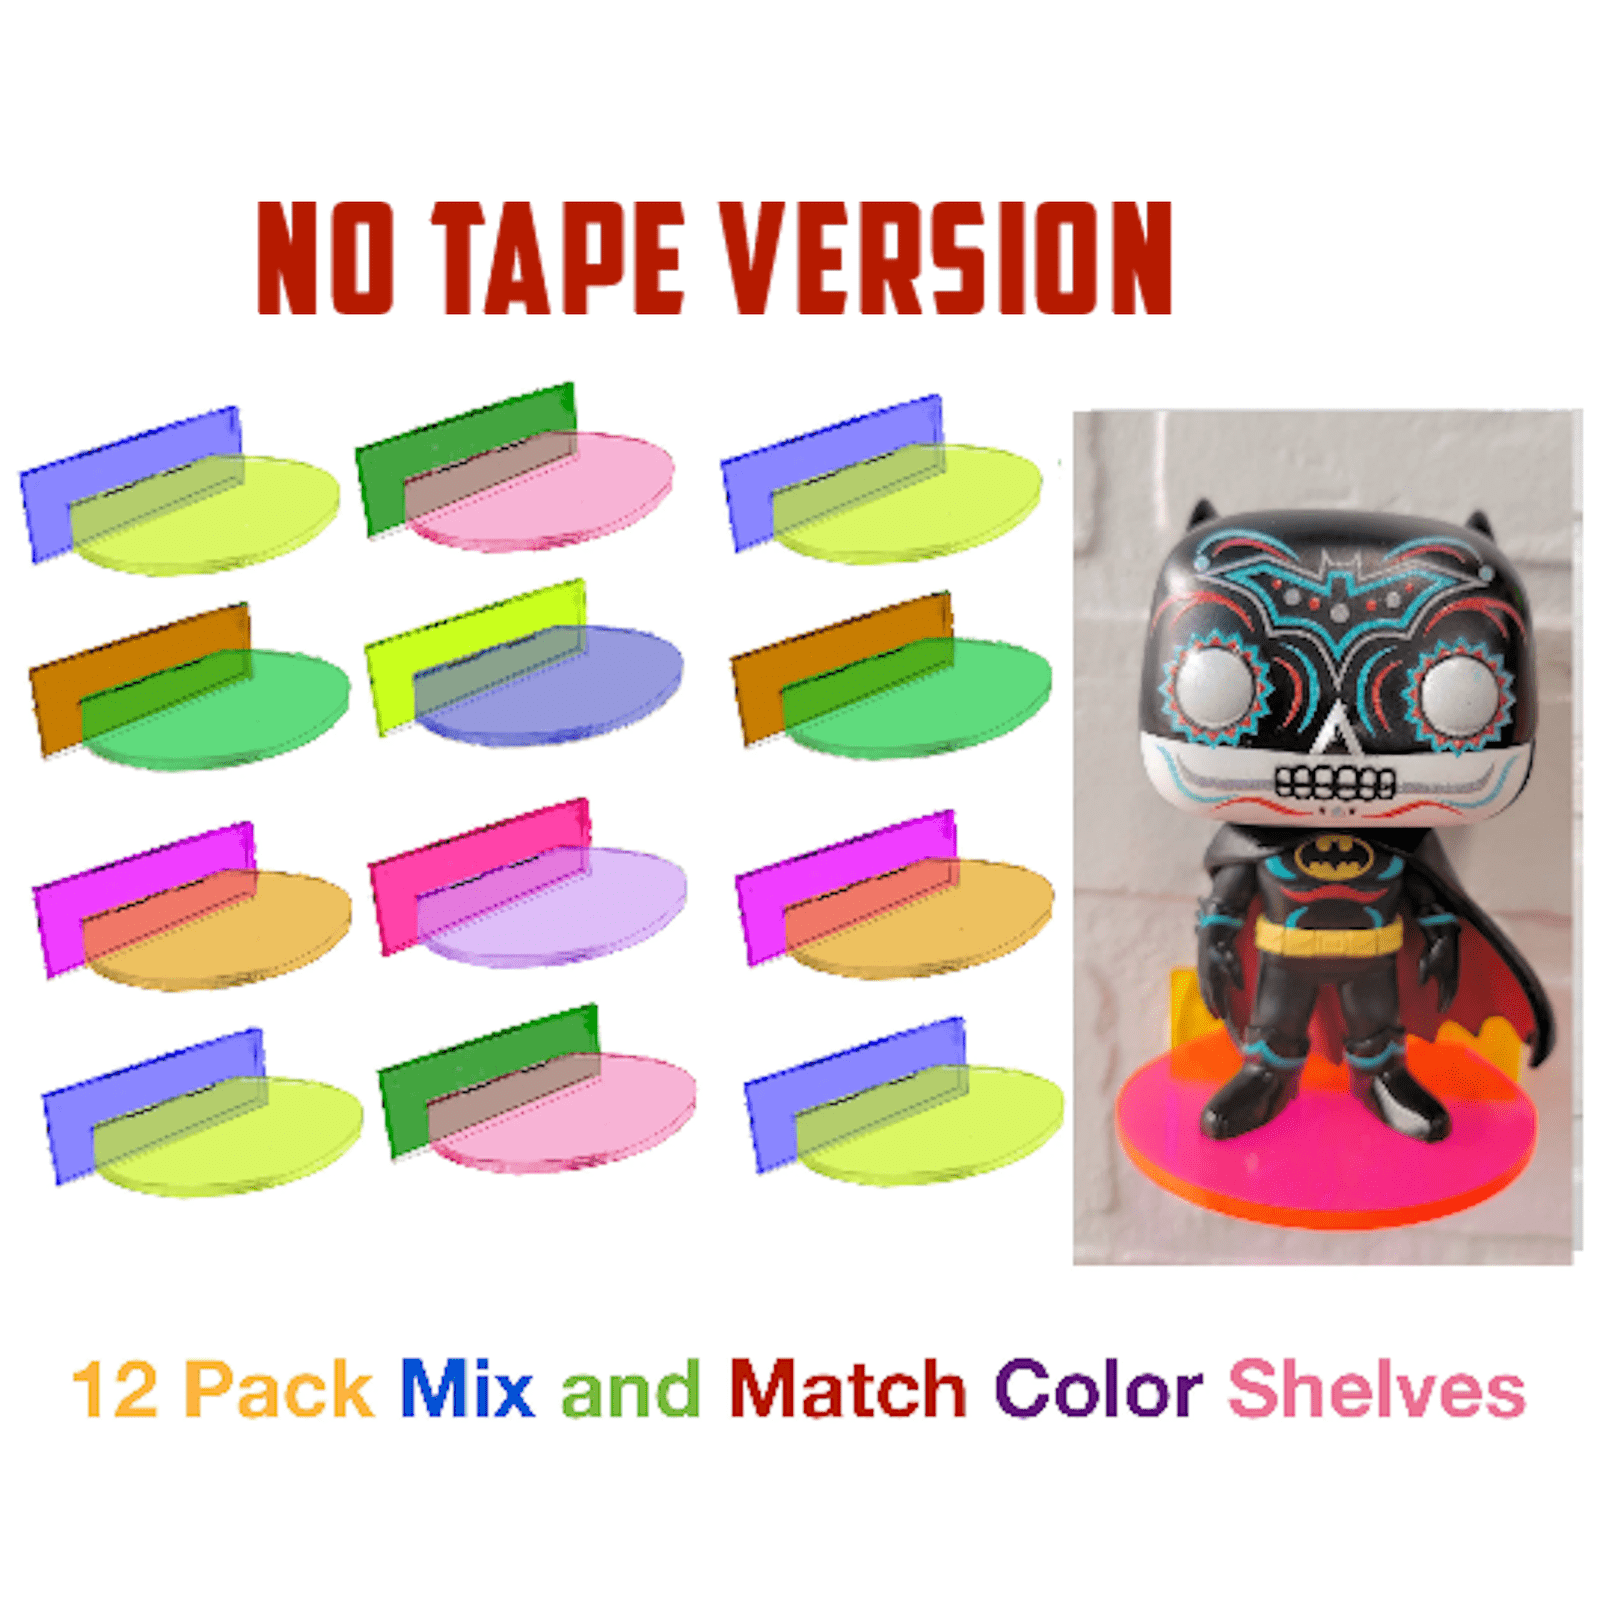 Funko Pop Vinyl Acrylic Wall Stand, Stick On, Single Shelf Neon Colors Mix and Match No tape Version